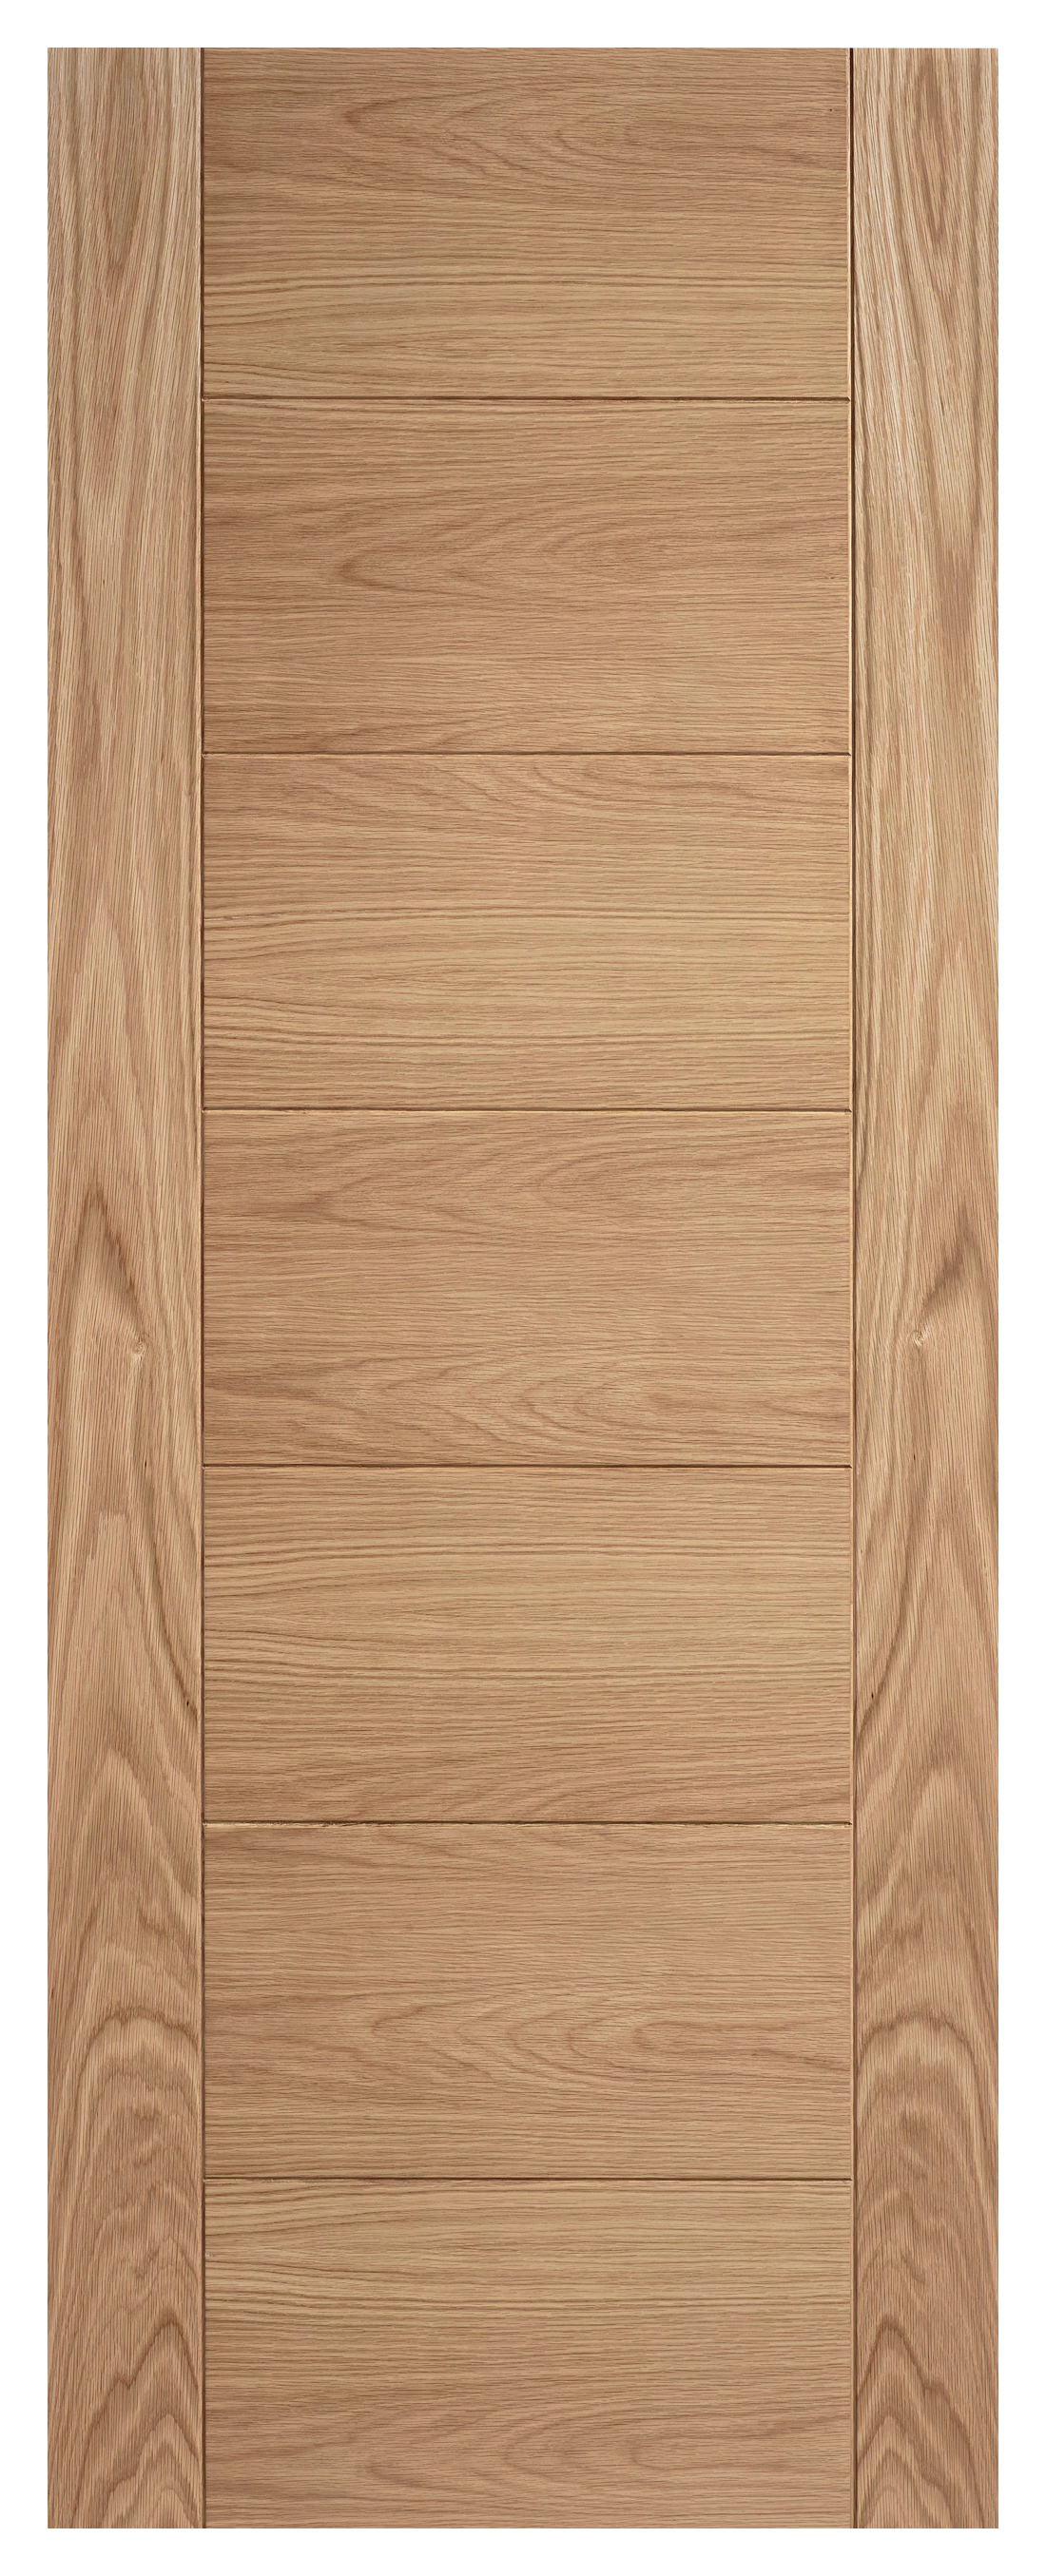 Image of LPD Internal Carini 7 Panel Unfinished Oak Solid Core Door - 826 x 2040mm